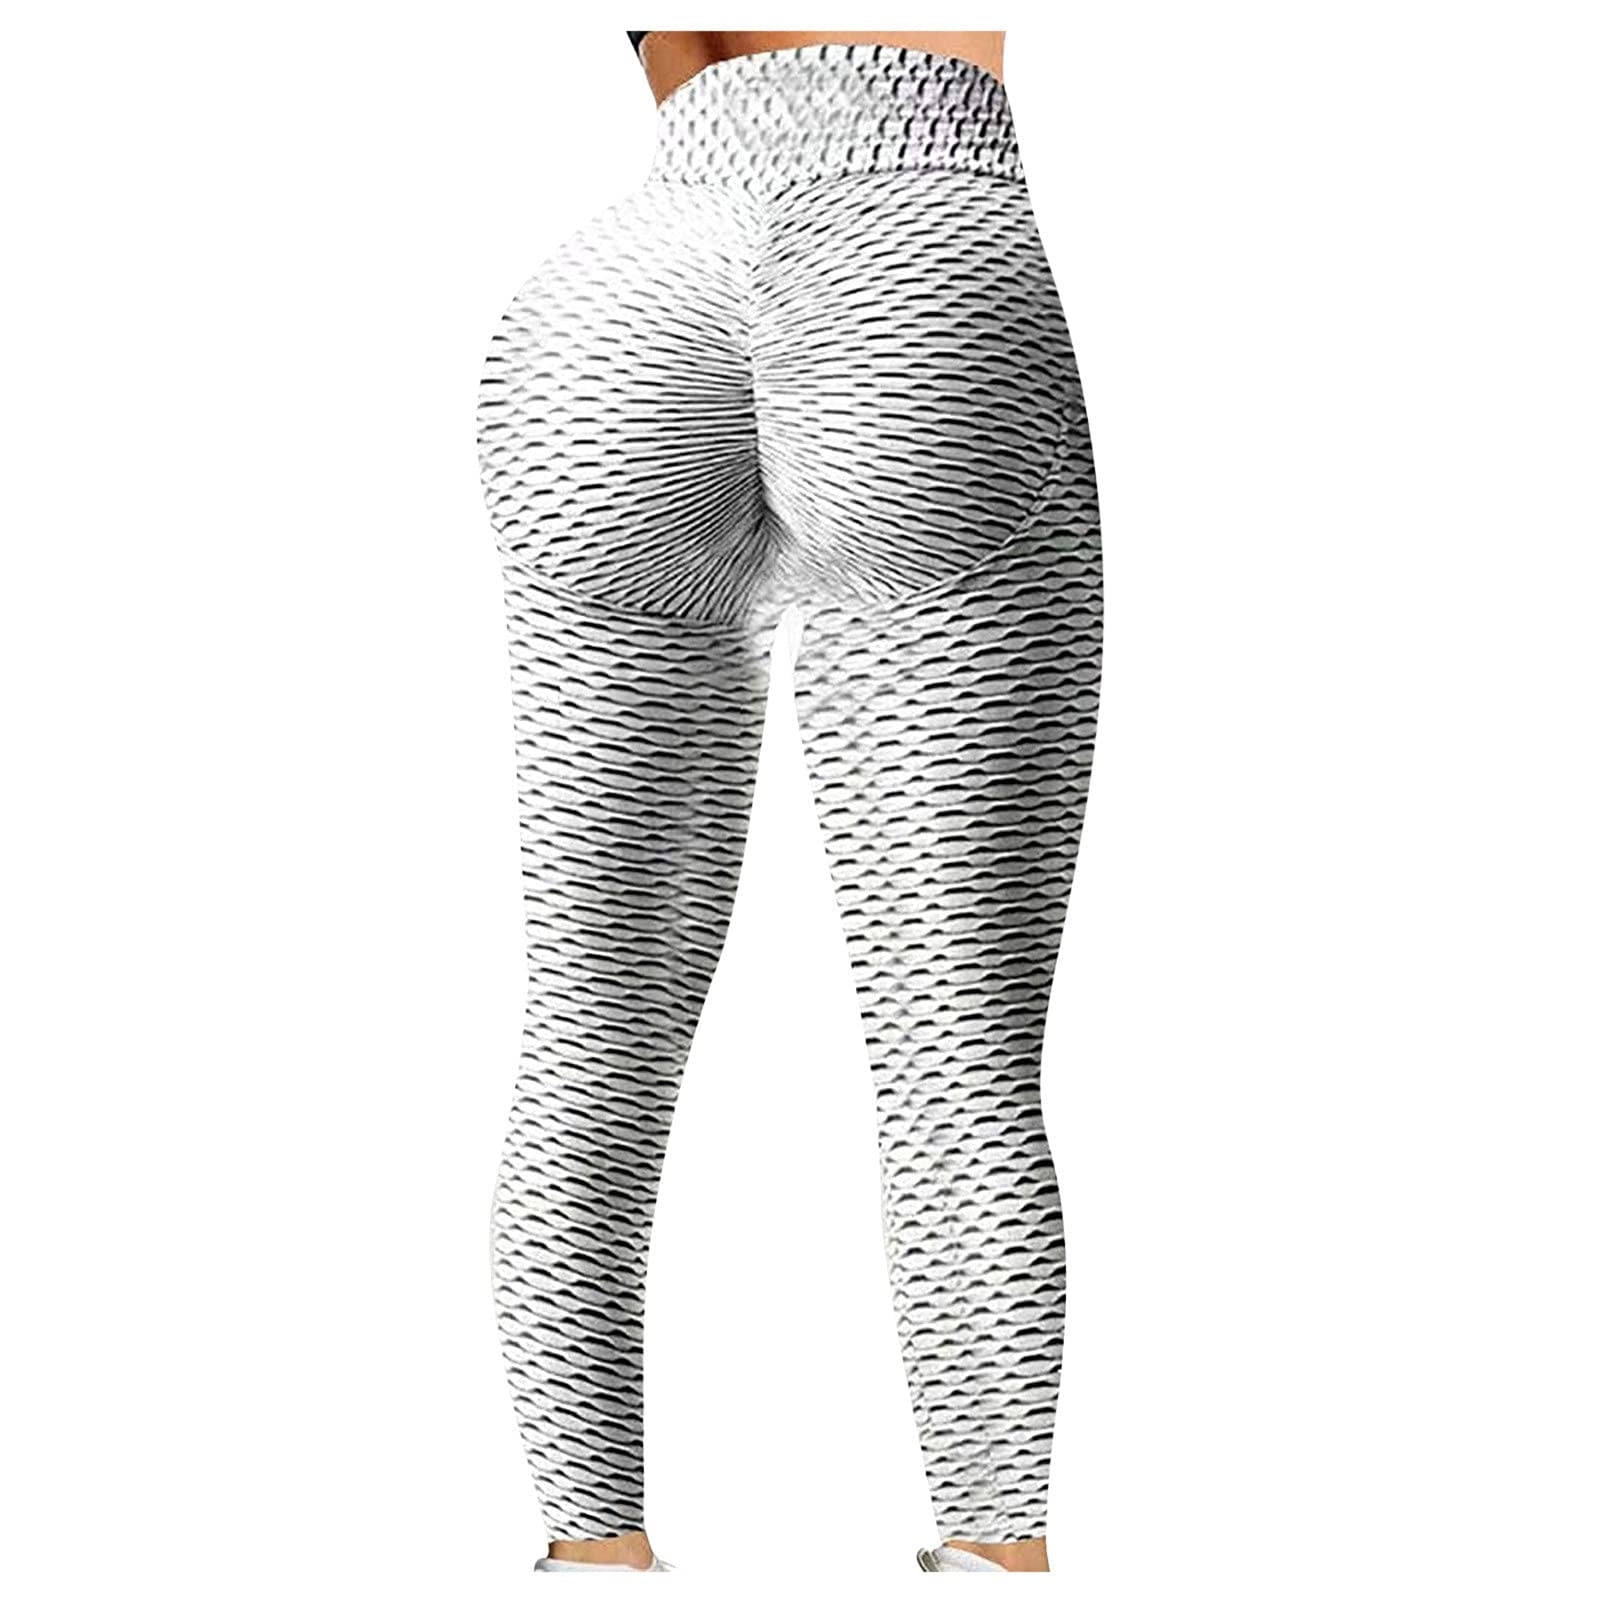 YUNAFFT Yoga Pants for Women Clearance Plus Size Women Scrunch